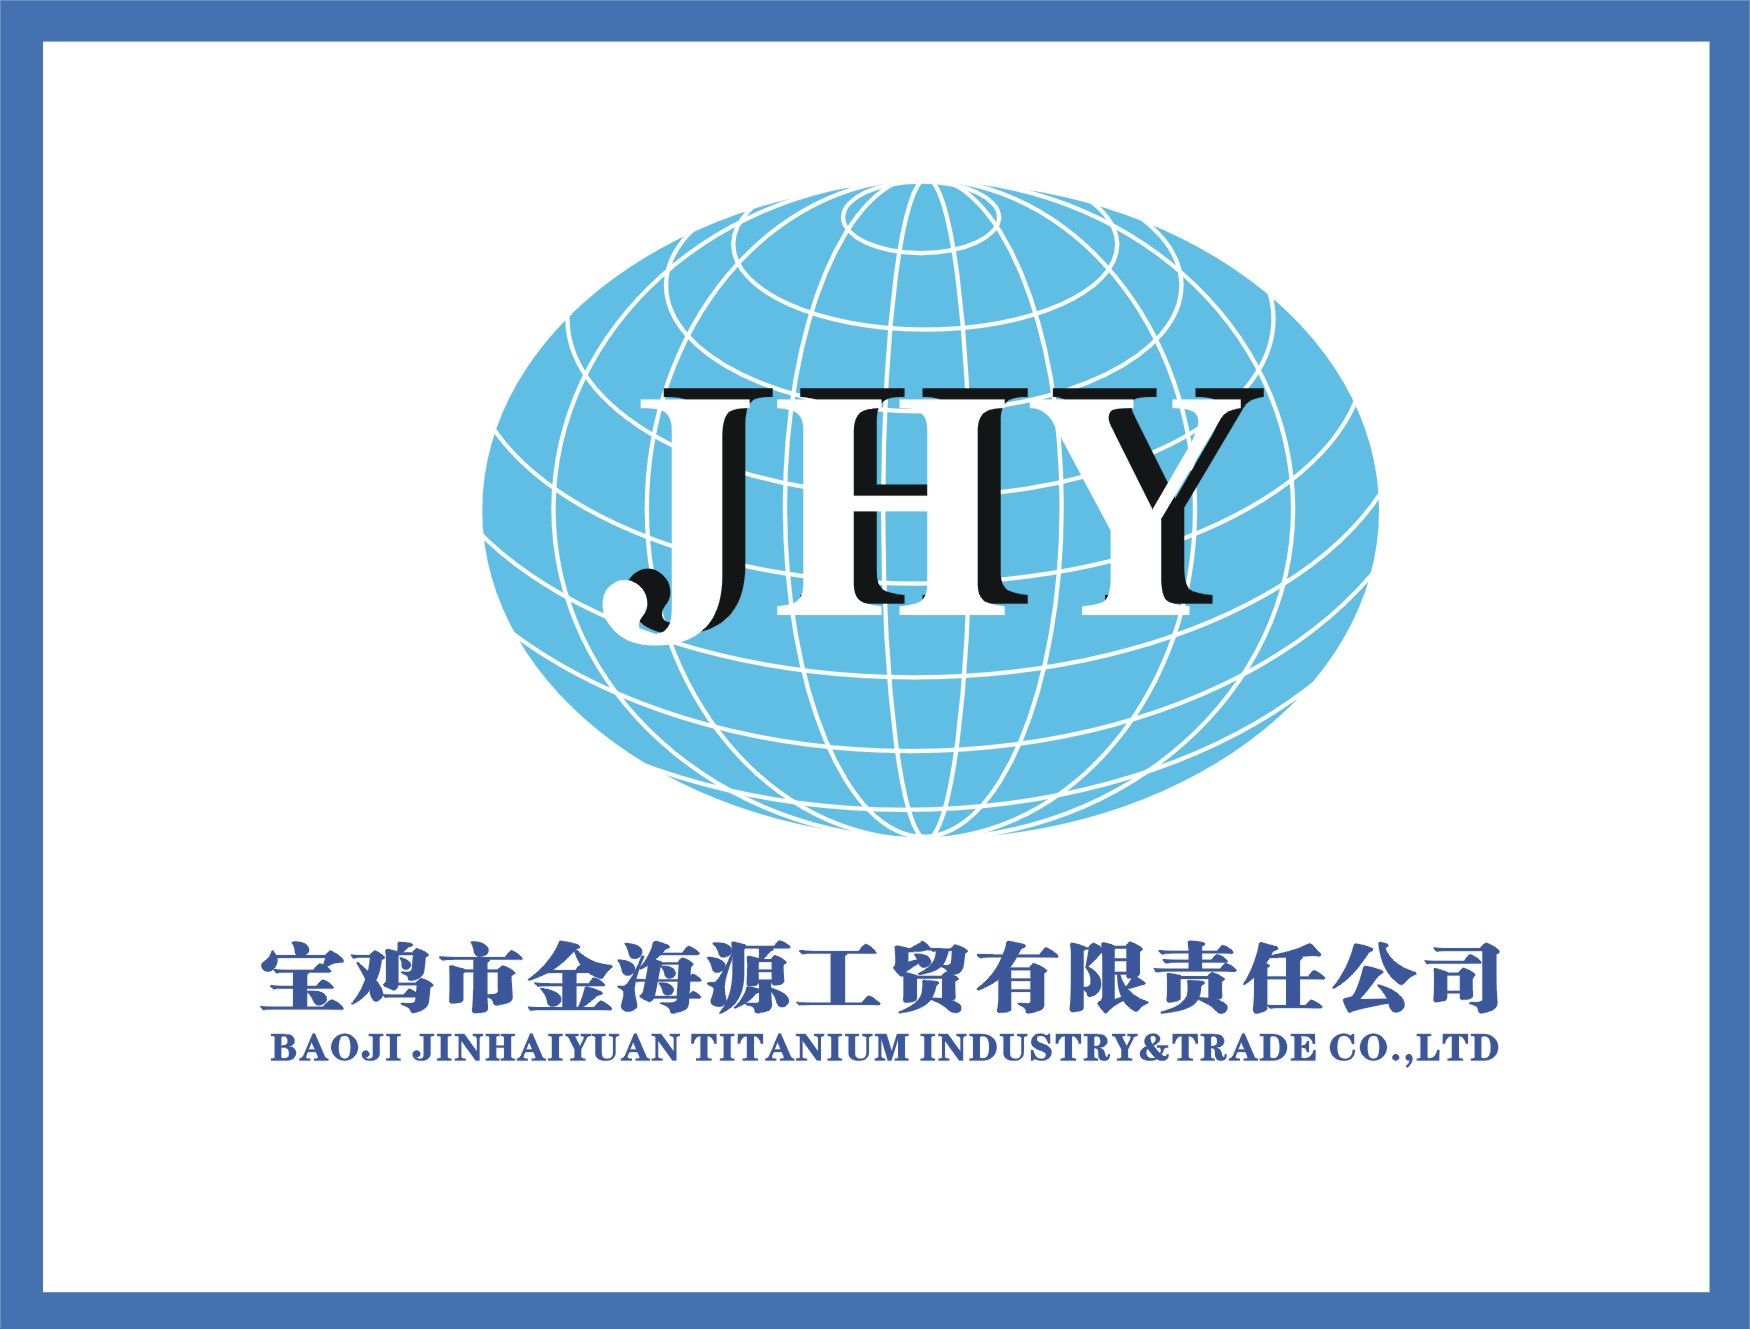 Baoji Jinhaiyuan Titanium Industry&Trade Co., Ltd. logo